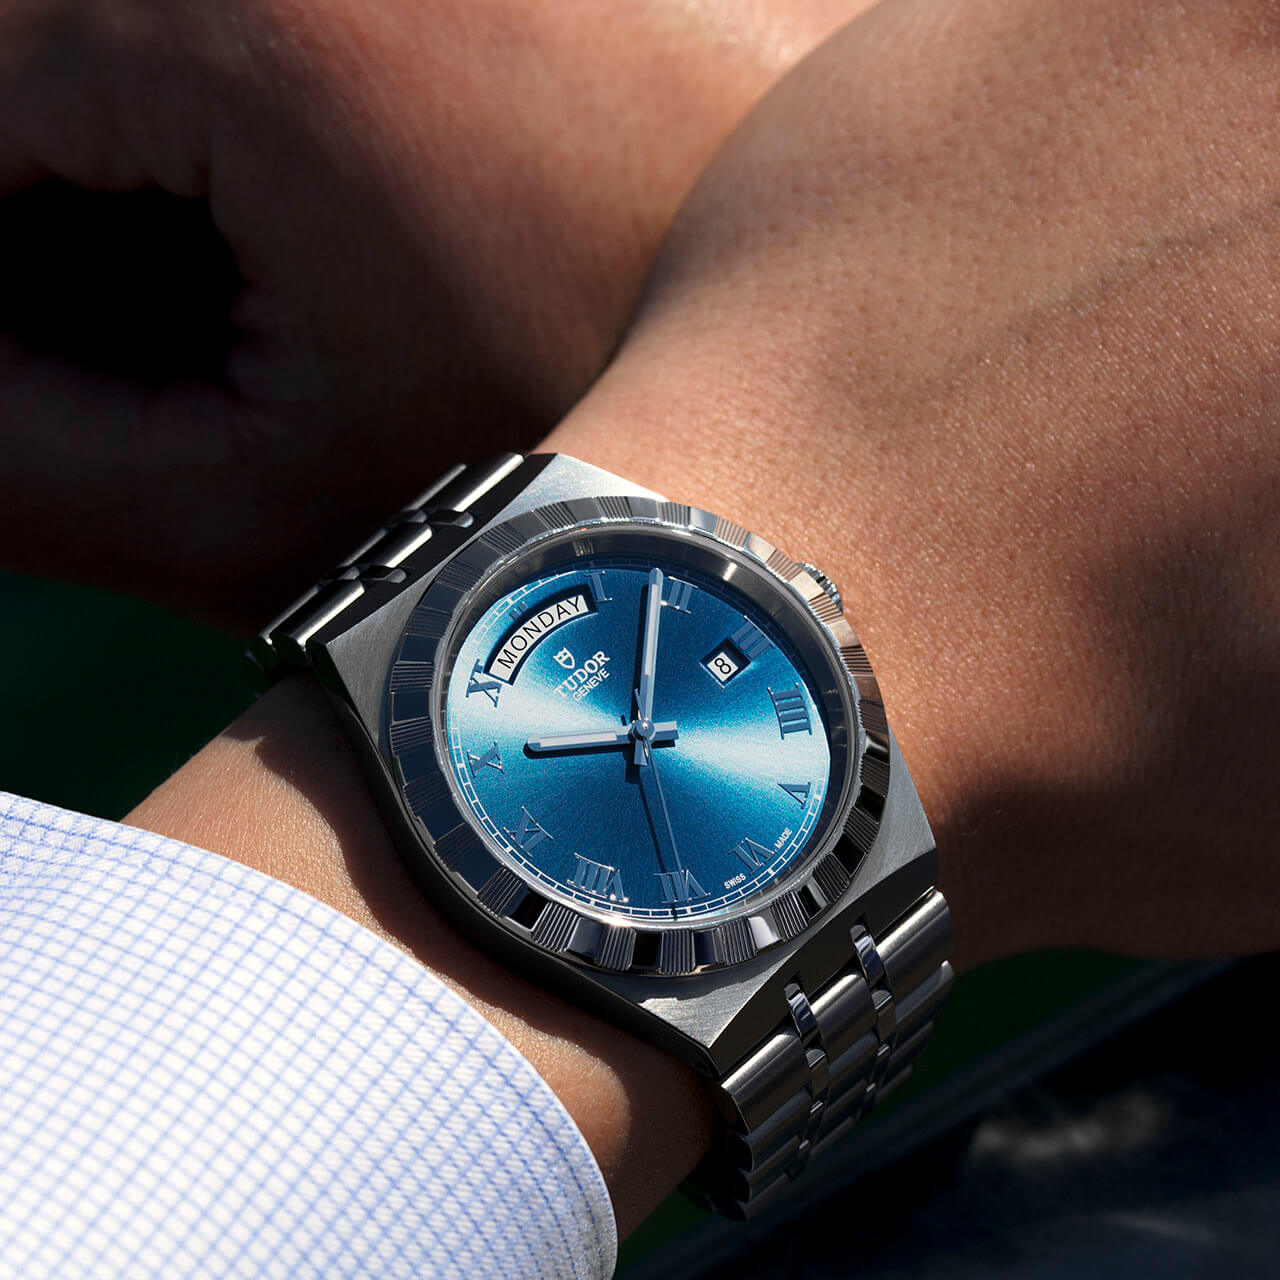 A man's wrist with a blue watch on it.